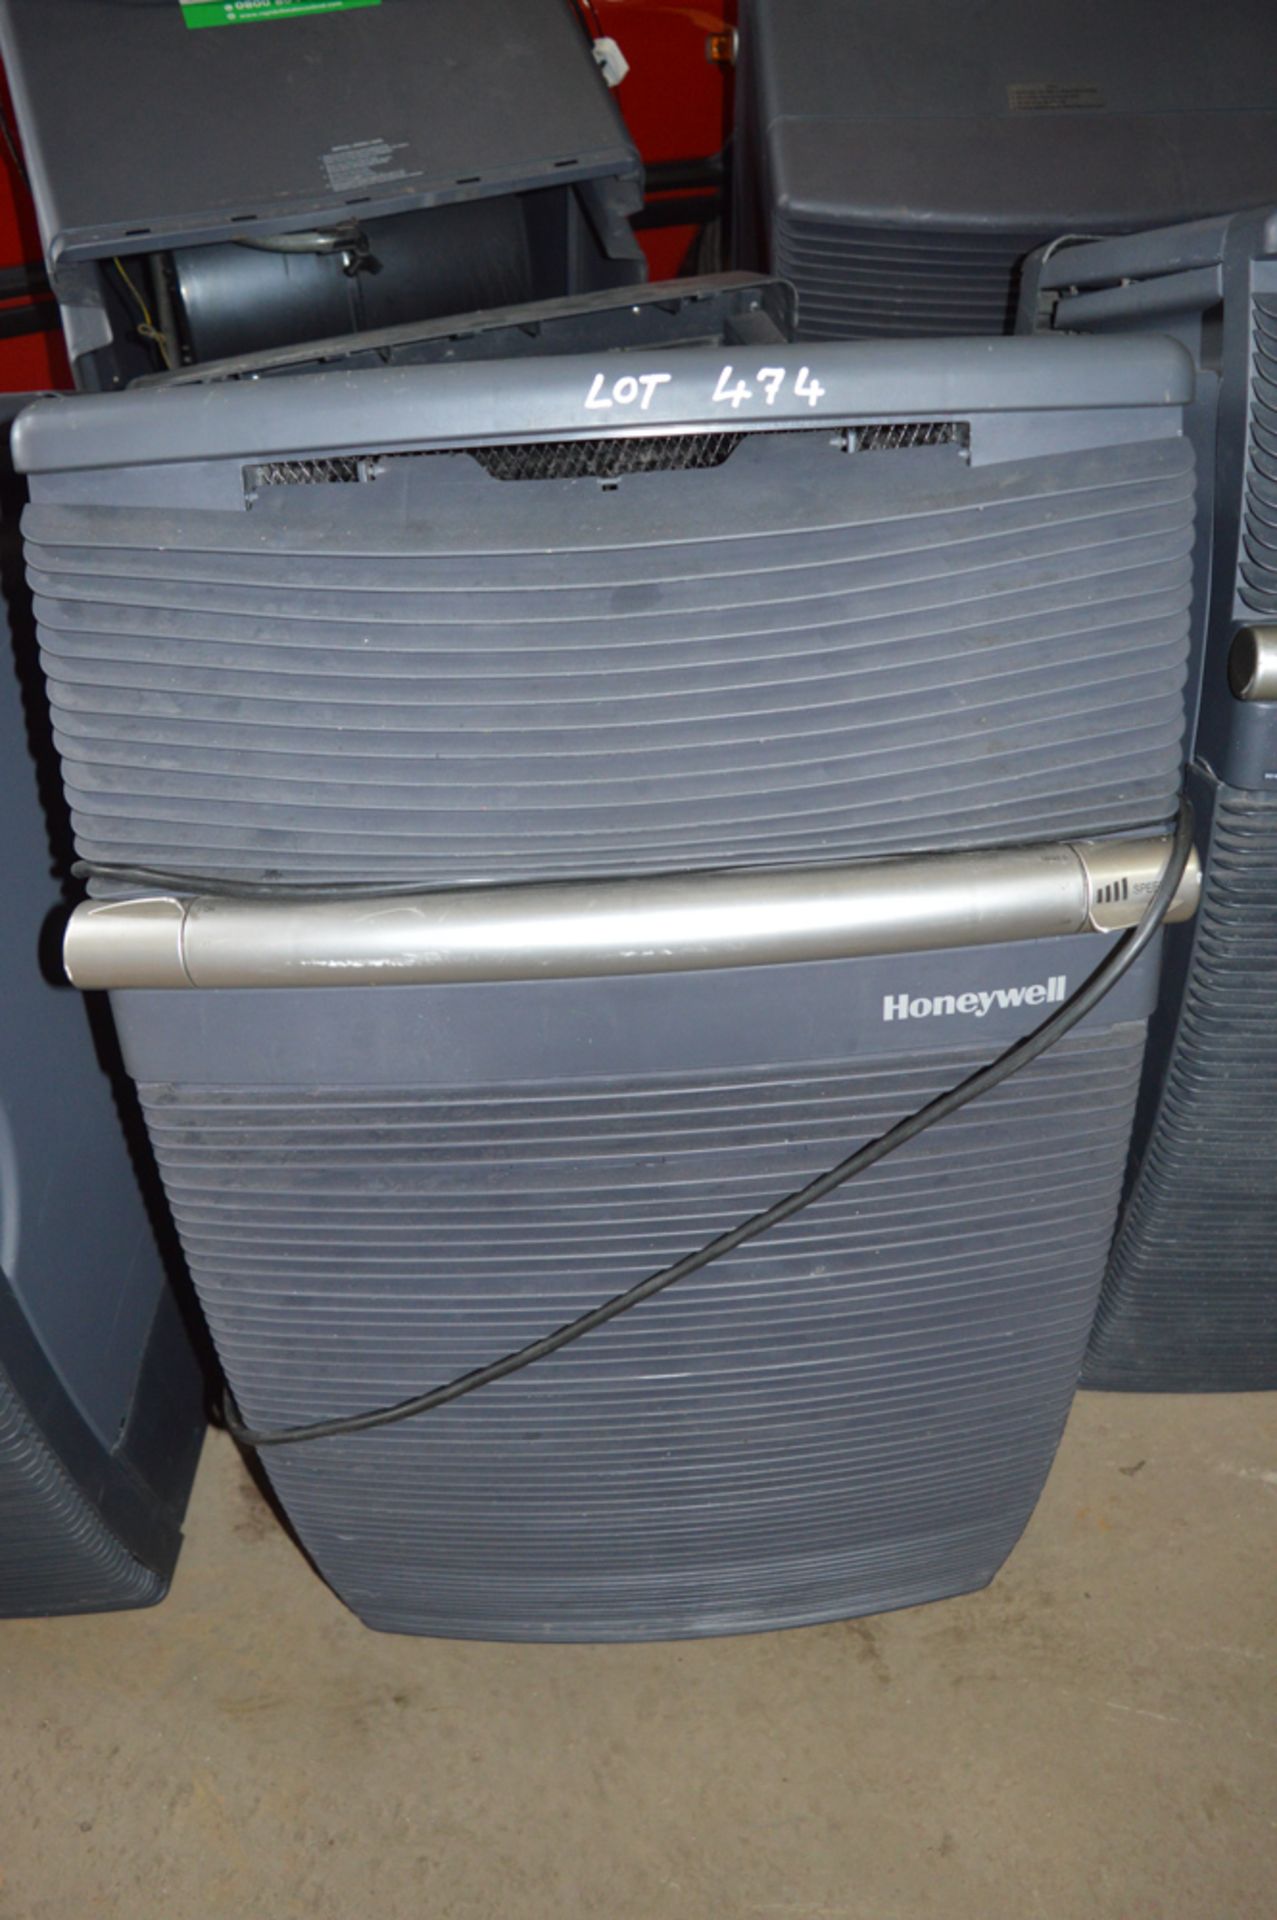 Airtek 240v air conditioning unit